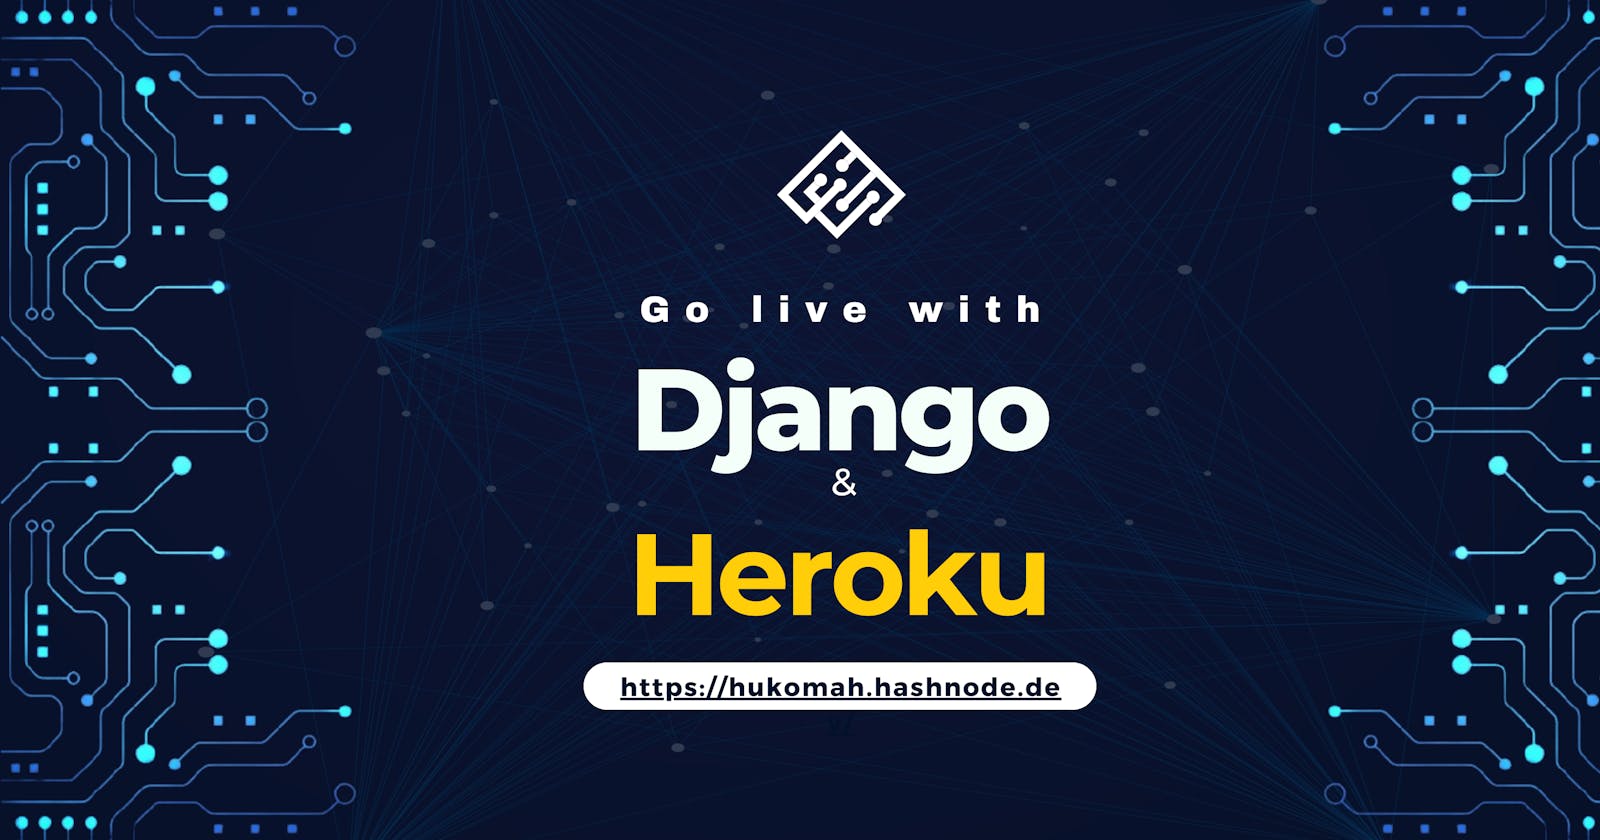 Uploading a Django Application with PostgreSQL Database to Heroku.